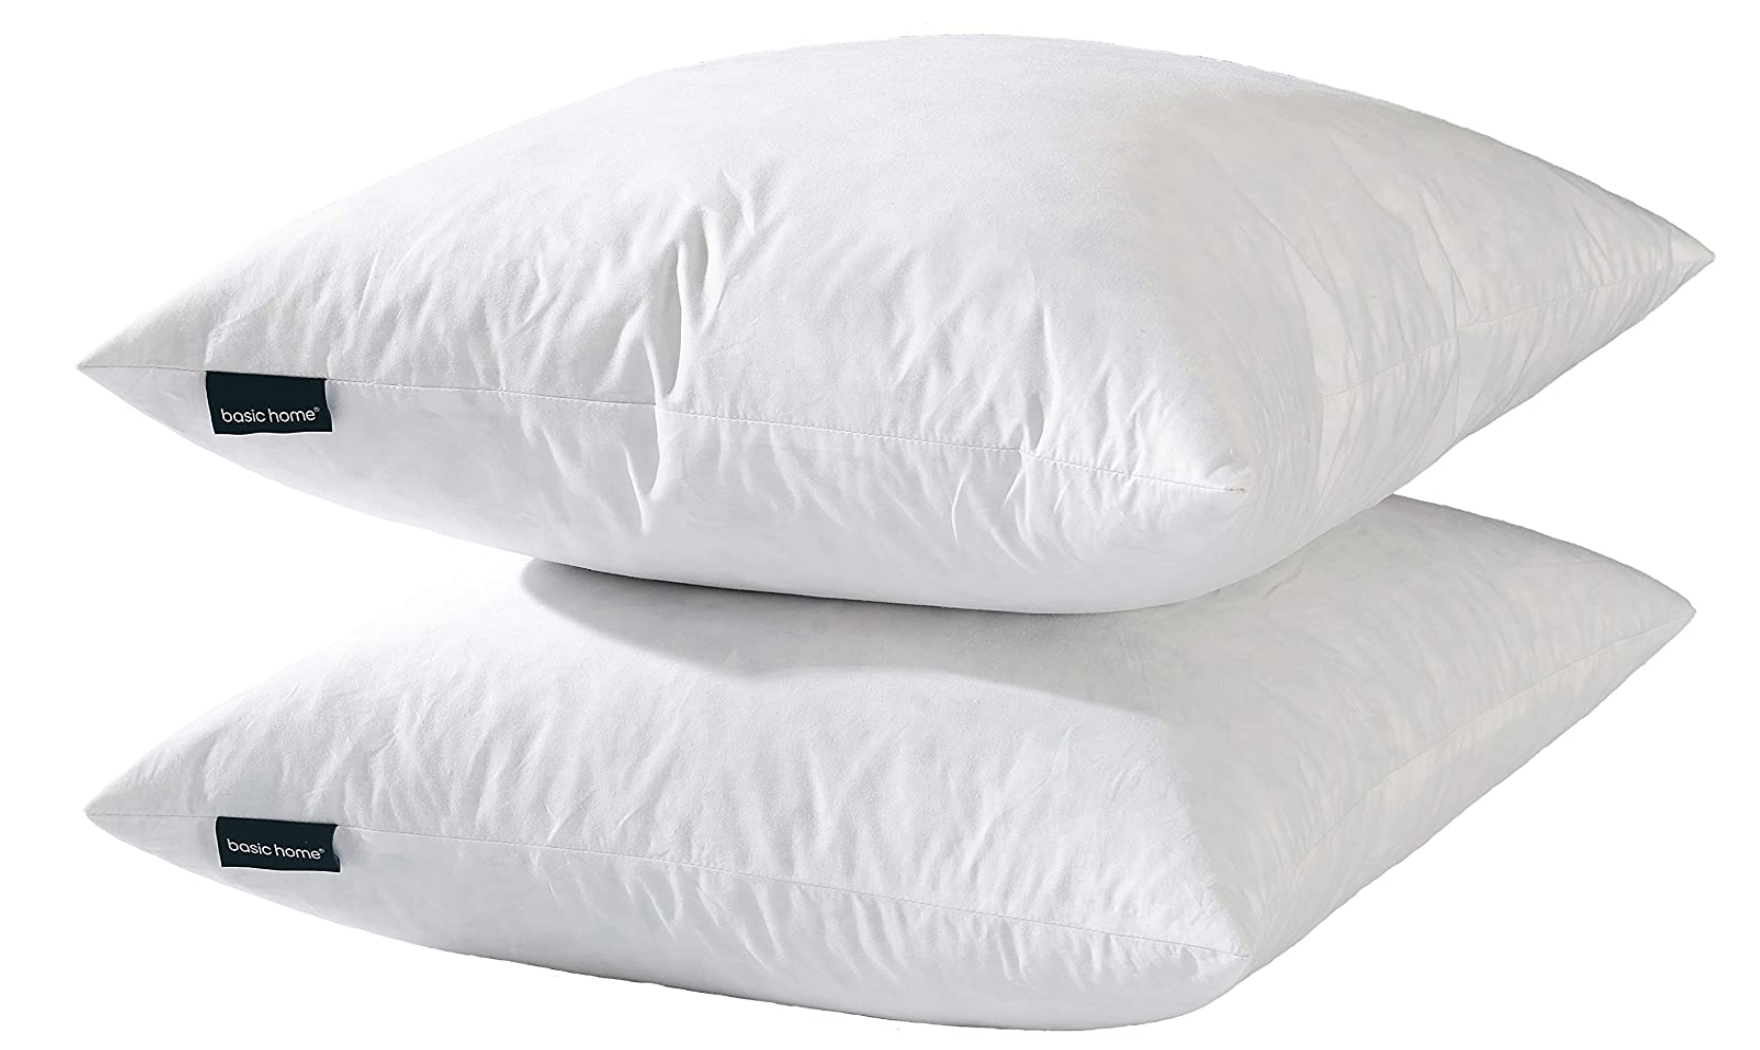 Tips On Choosing Throw Pillows - VisualHunt